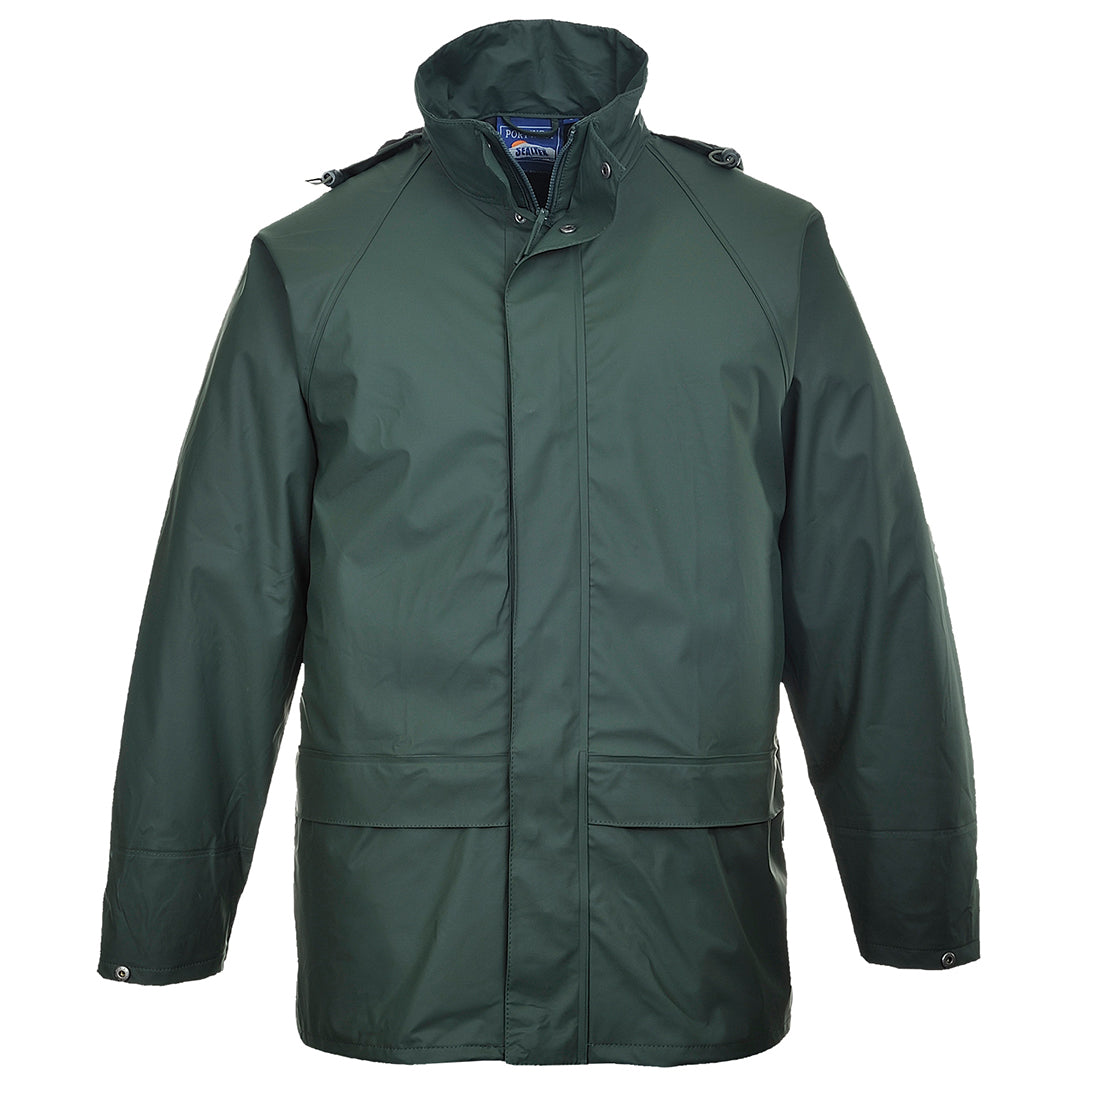 Portwest S450 Olive Sz M Sealtex Classic Jacket Waterproof Rain Coat Parka Work Wear